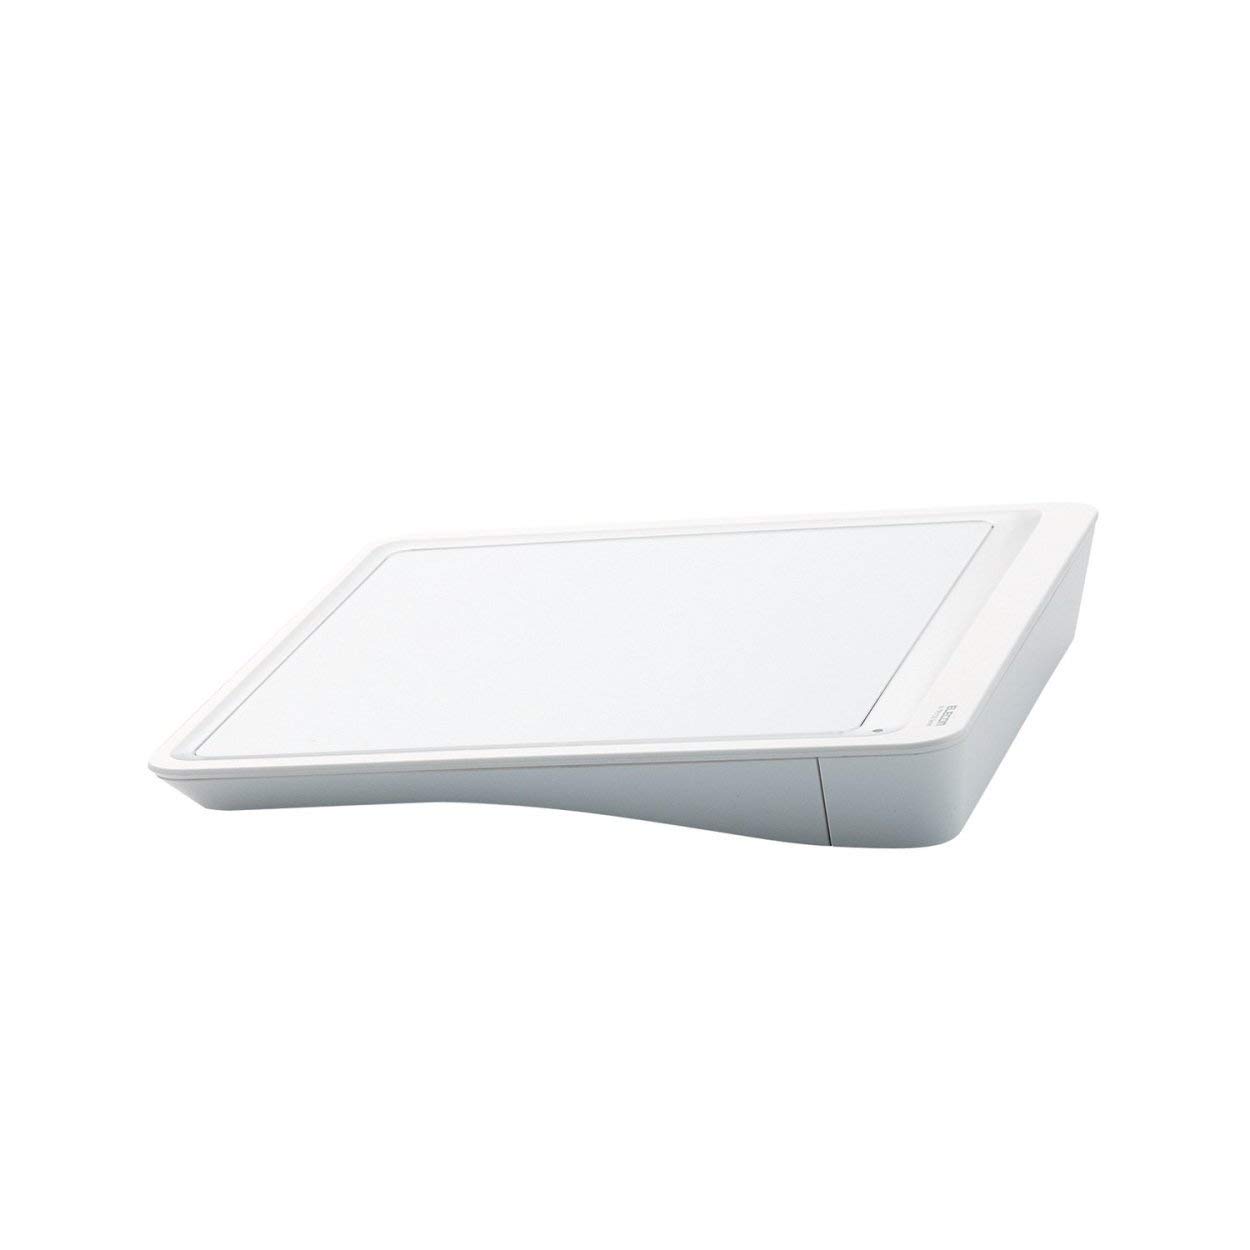 Elecom Wireless Touch Pad Multi Gesture Windows8, White Medium – tp01dswh